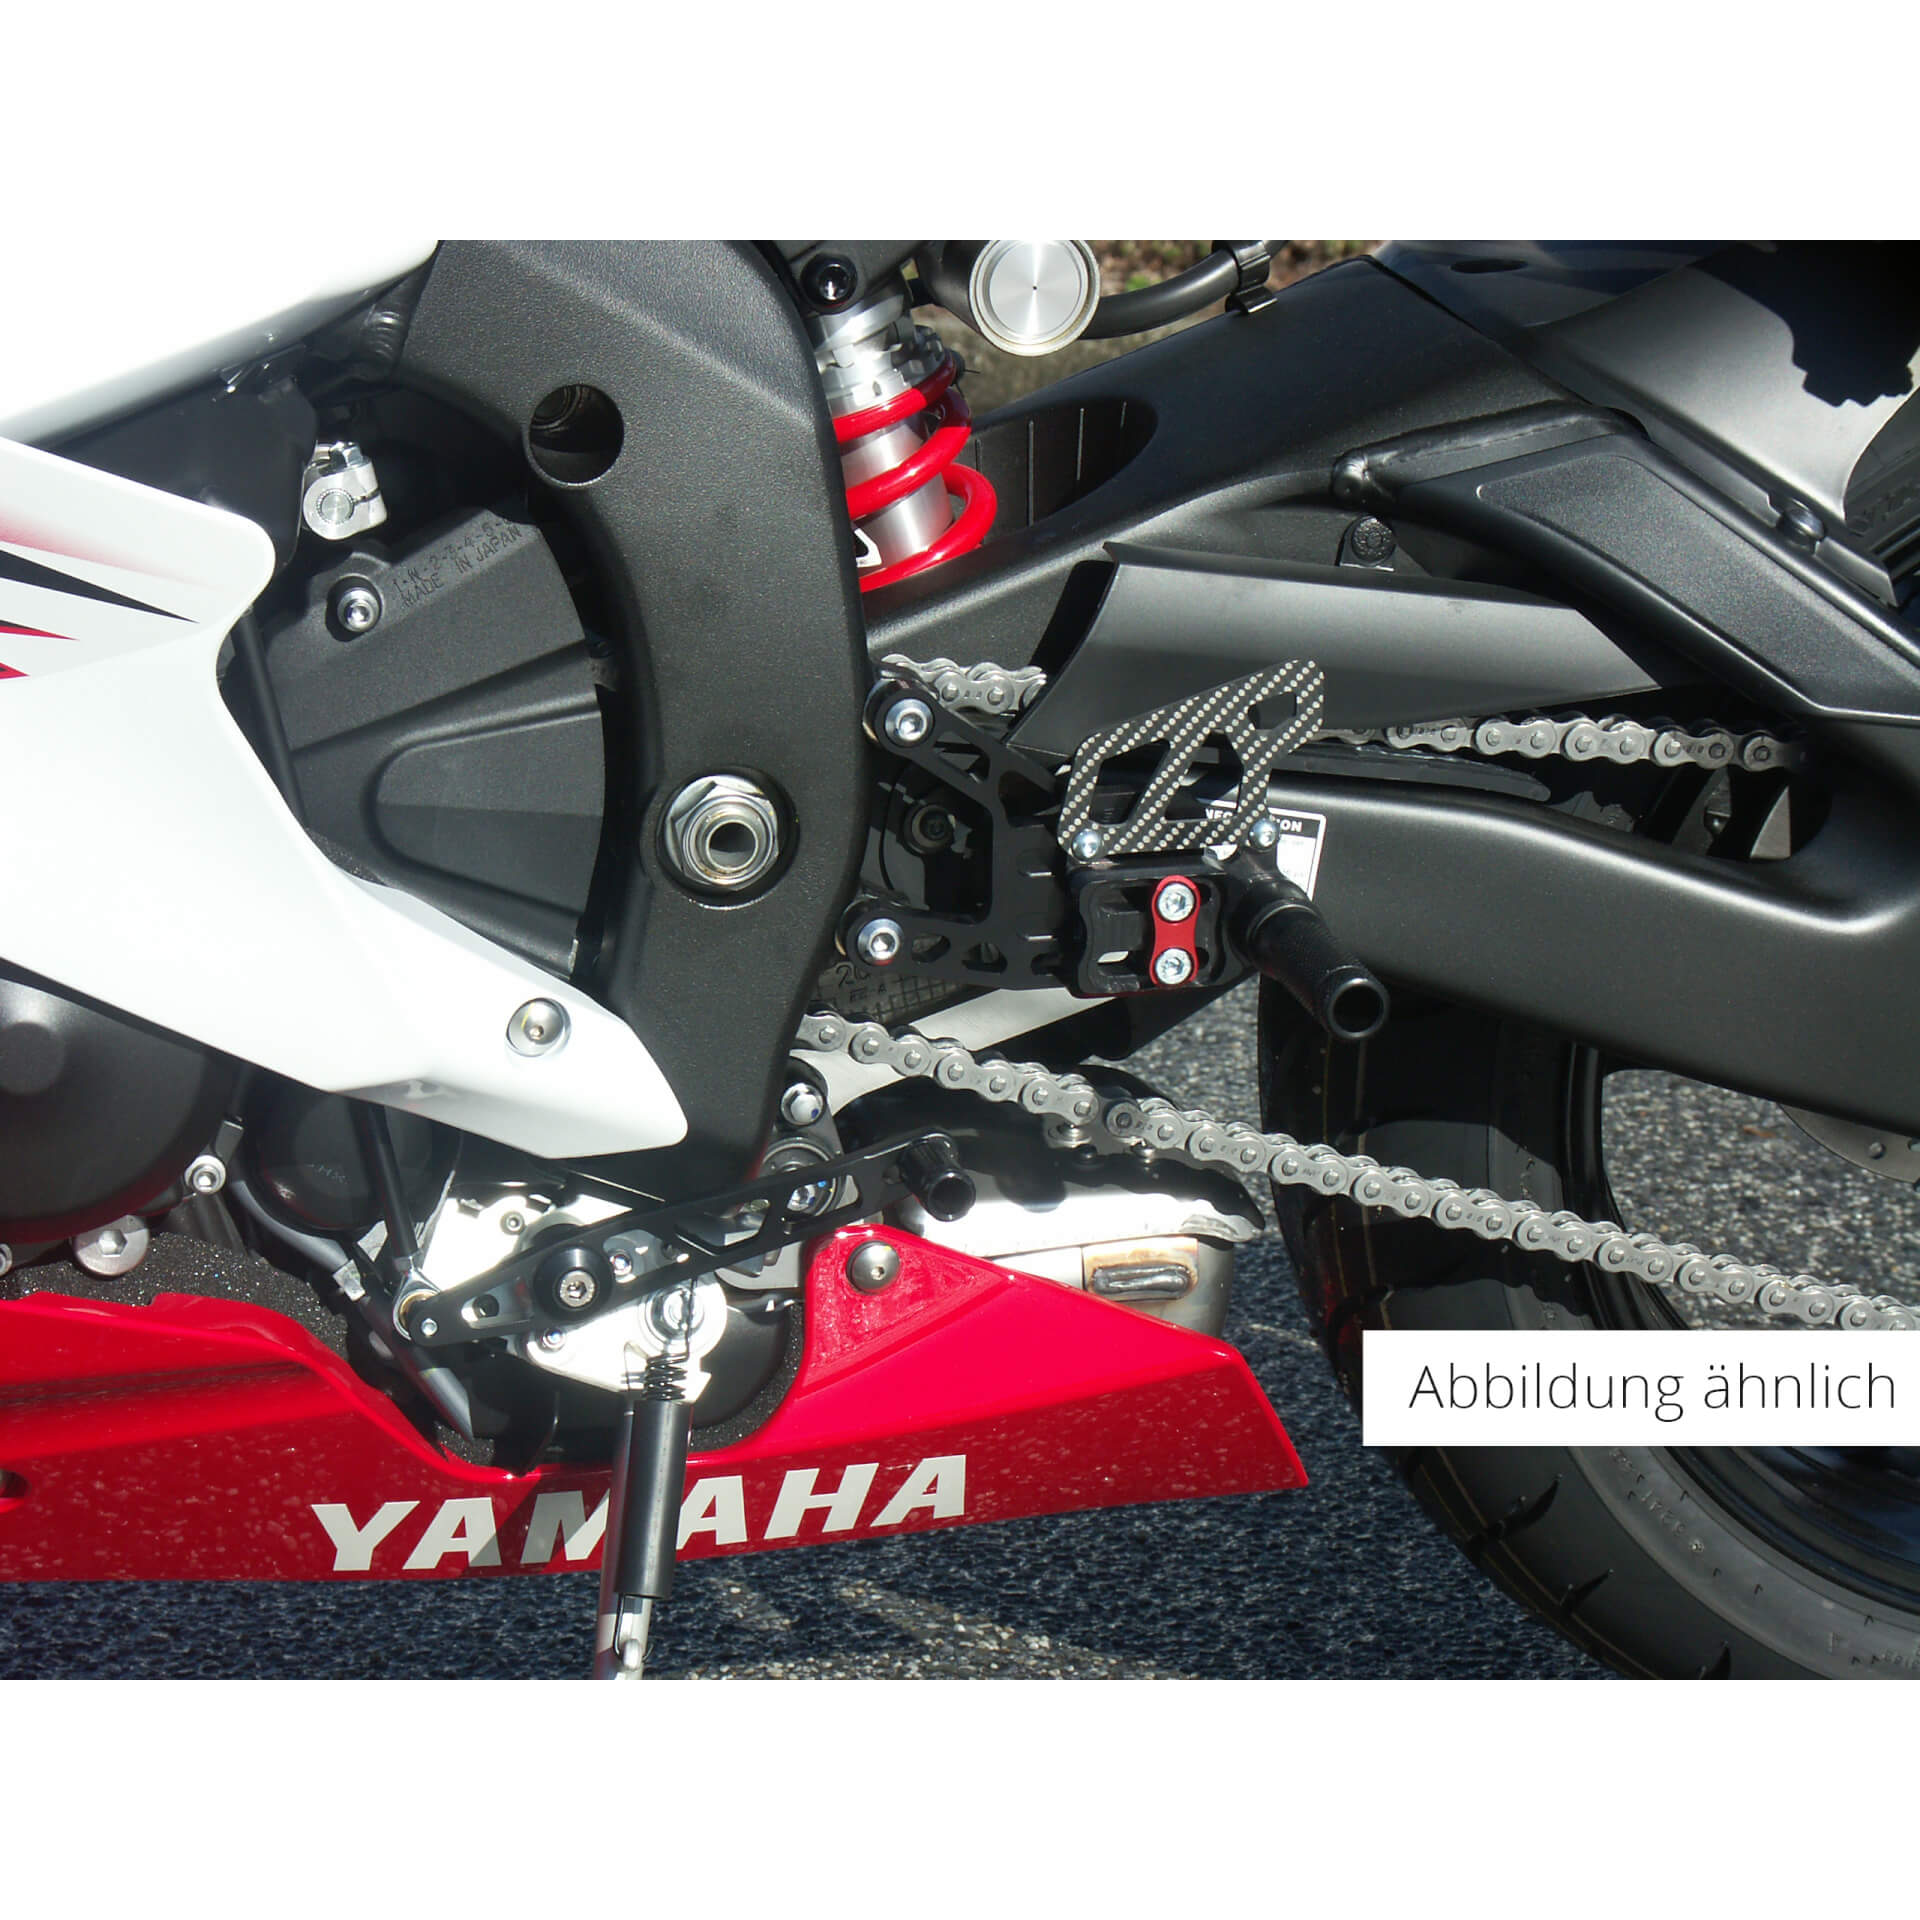 lsl Spare part 2-slide footrest system 118Y104-RRT, YZF R6 06-, Racing